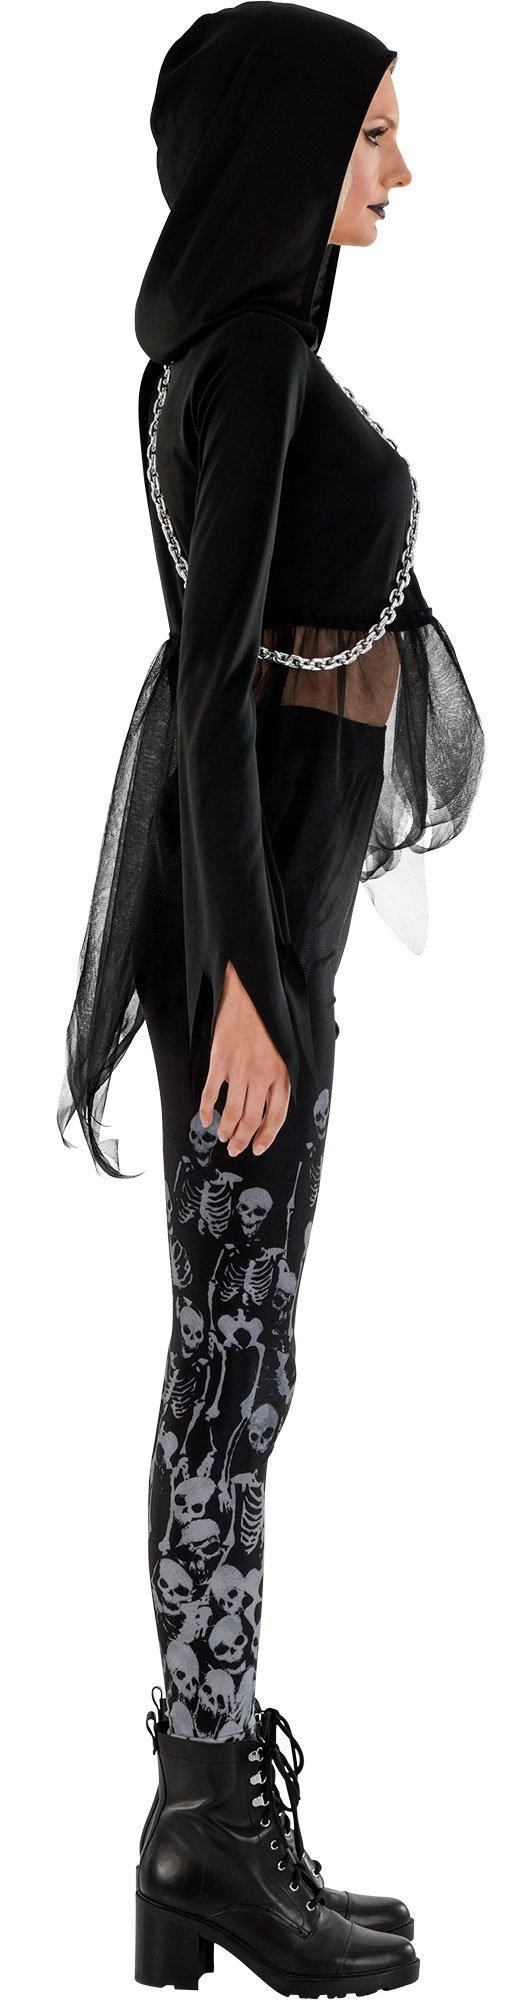 Adult Goth Reaper Costume